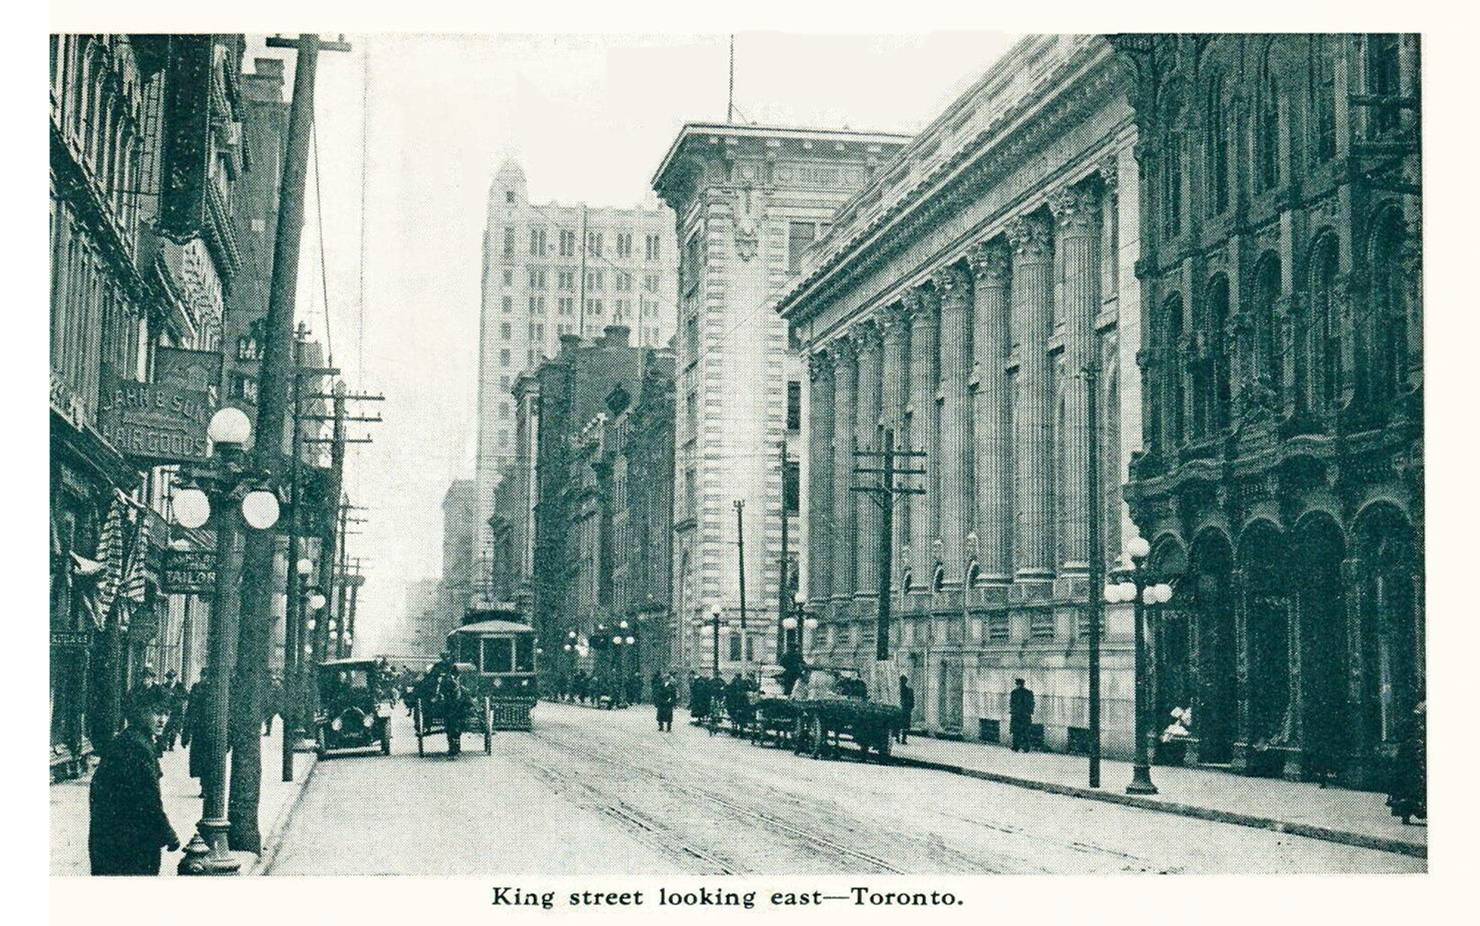 POSTCARD - TORONTO - KING STREET - LOOKING E - GROUND LEVEL - STREETCAR - WAGONS - ORNATE BANKS - 1910s